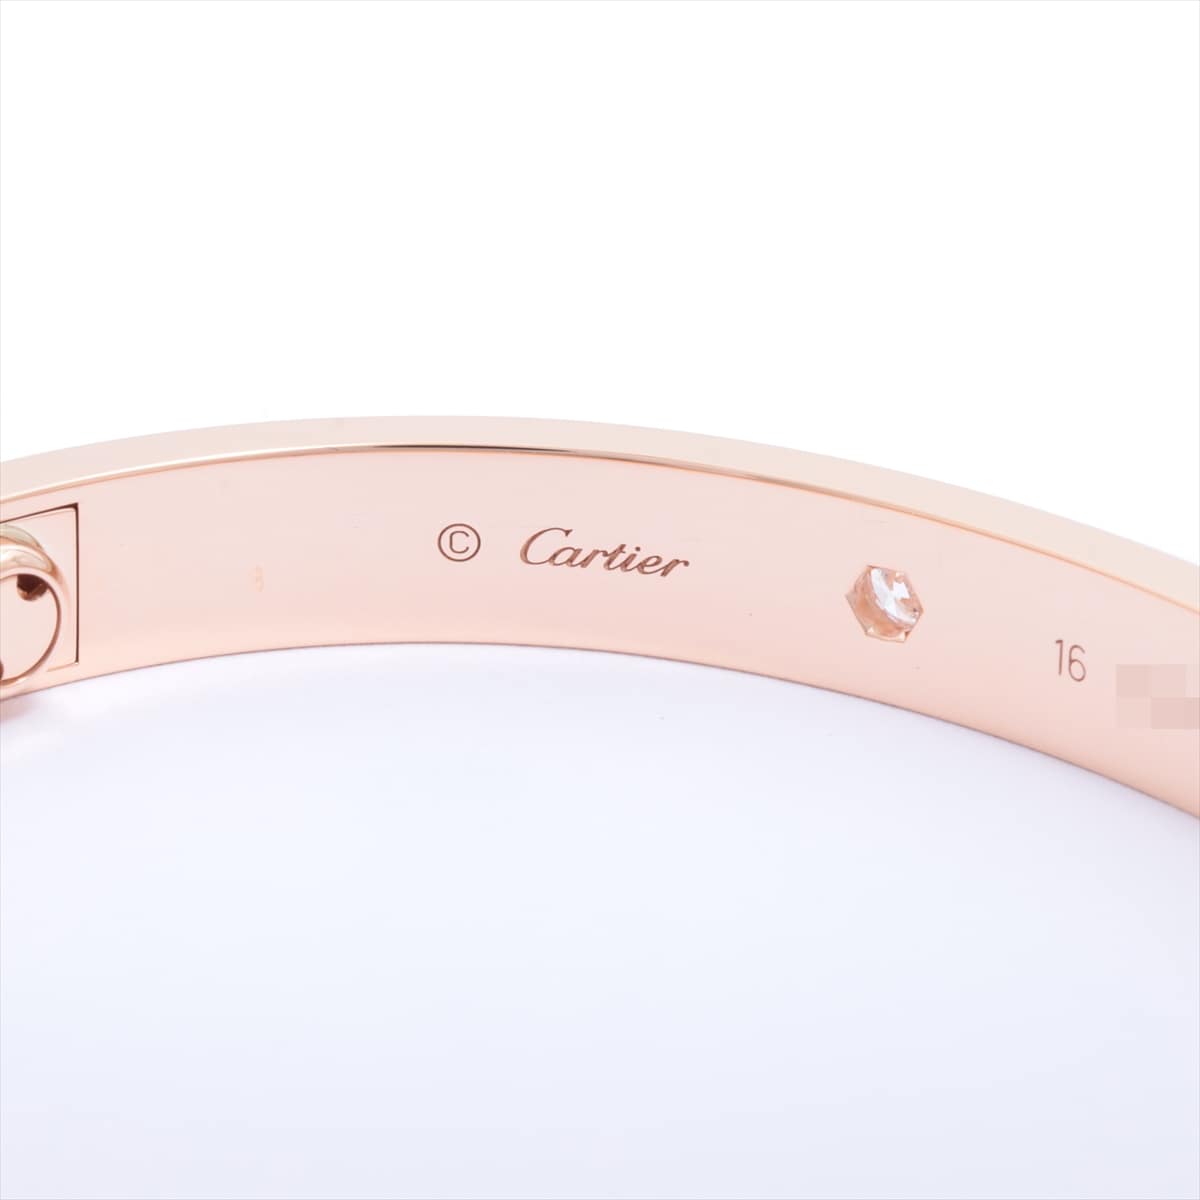 Cartier Love half diamond Bracelet 750 PG 30.4g 16